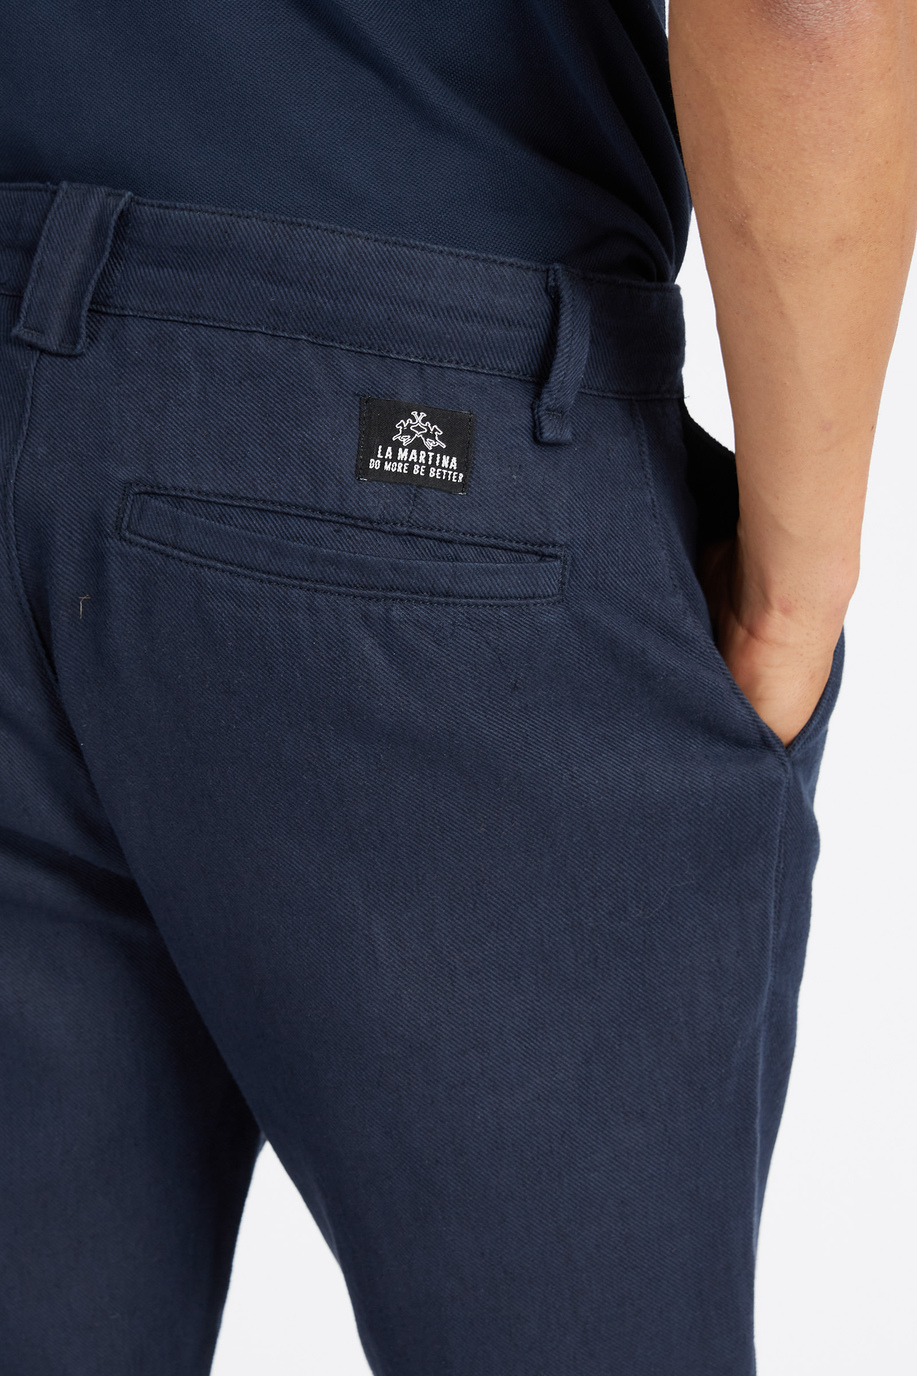 Pantalon chino homme coupe droite uni Logos - Vickan - Trousers | La Martina - Official Online Shop